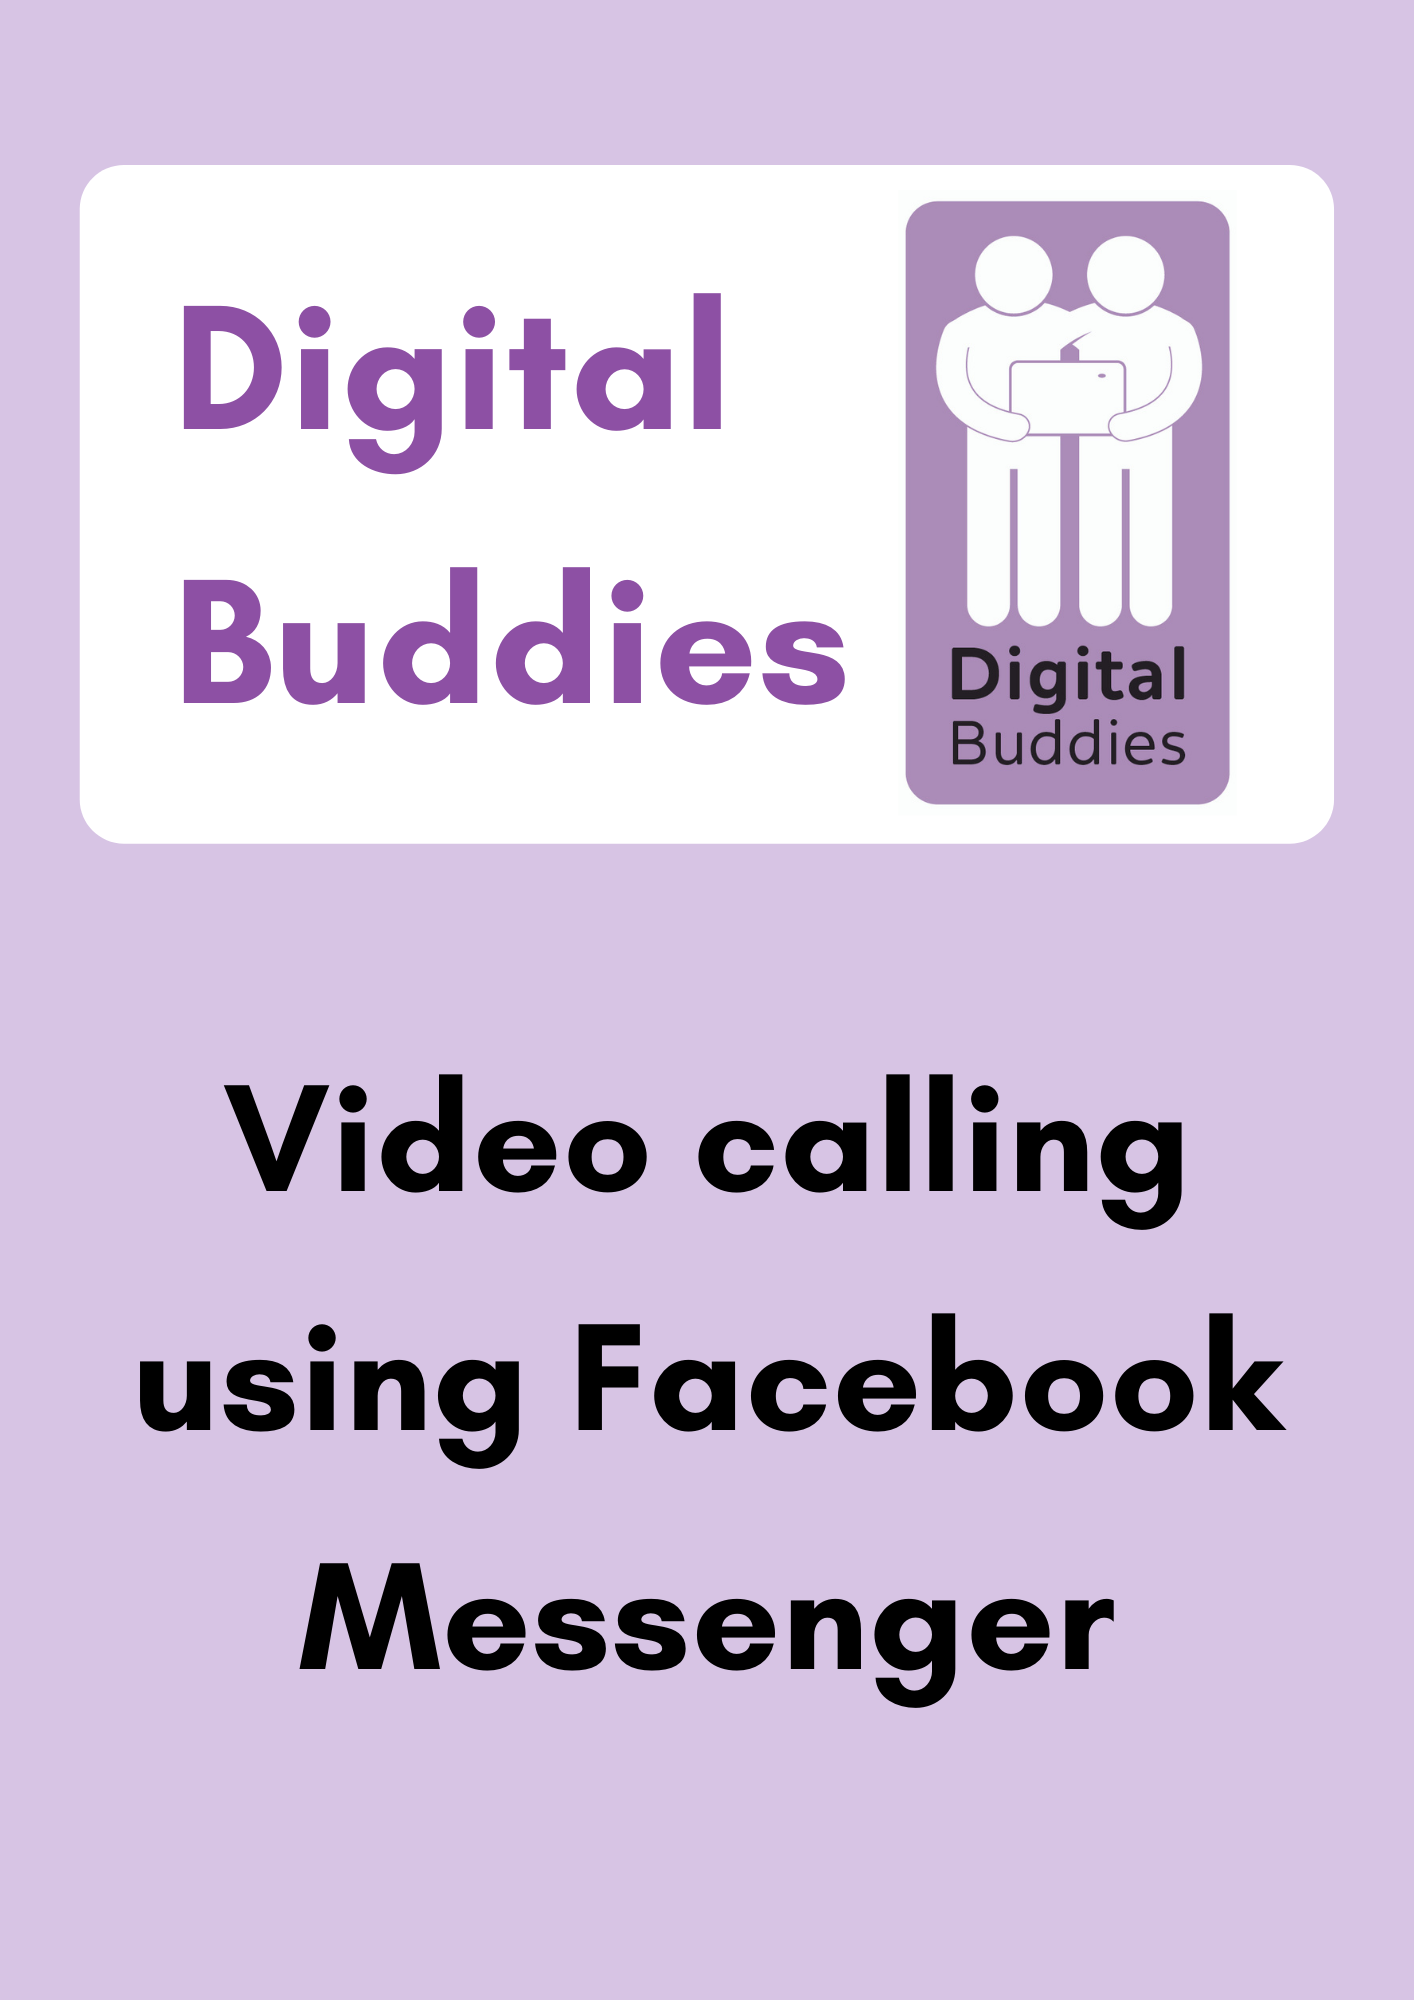 Digital buddies - Video calling using Facebook Messenger